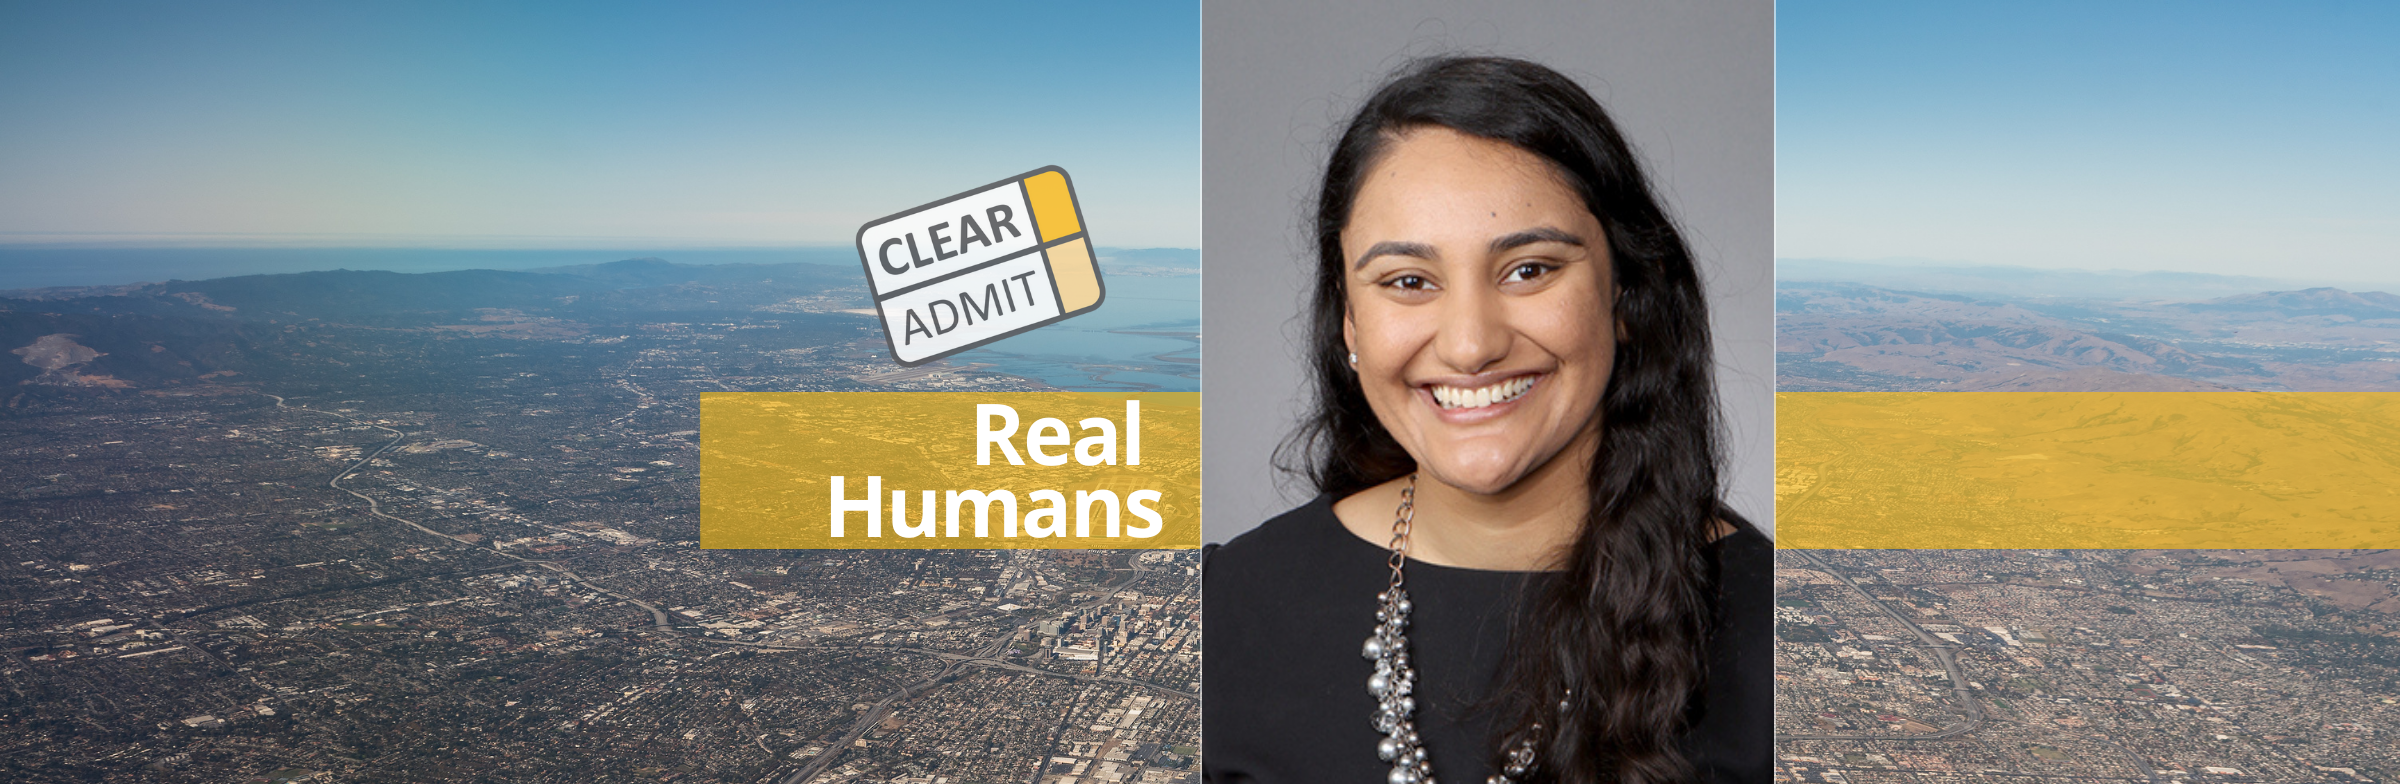 Image for Real Humans of Google: Malvi Hemani, Kellogg MBA/MS ’21, Google Product Manager